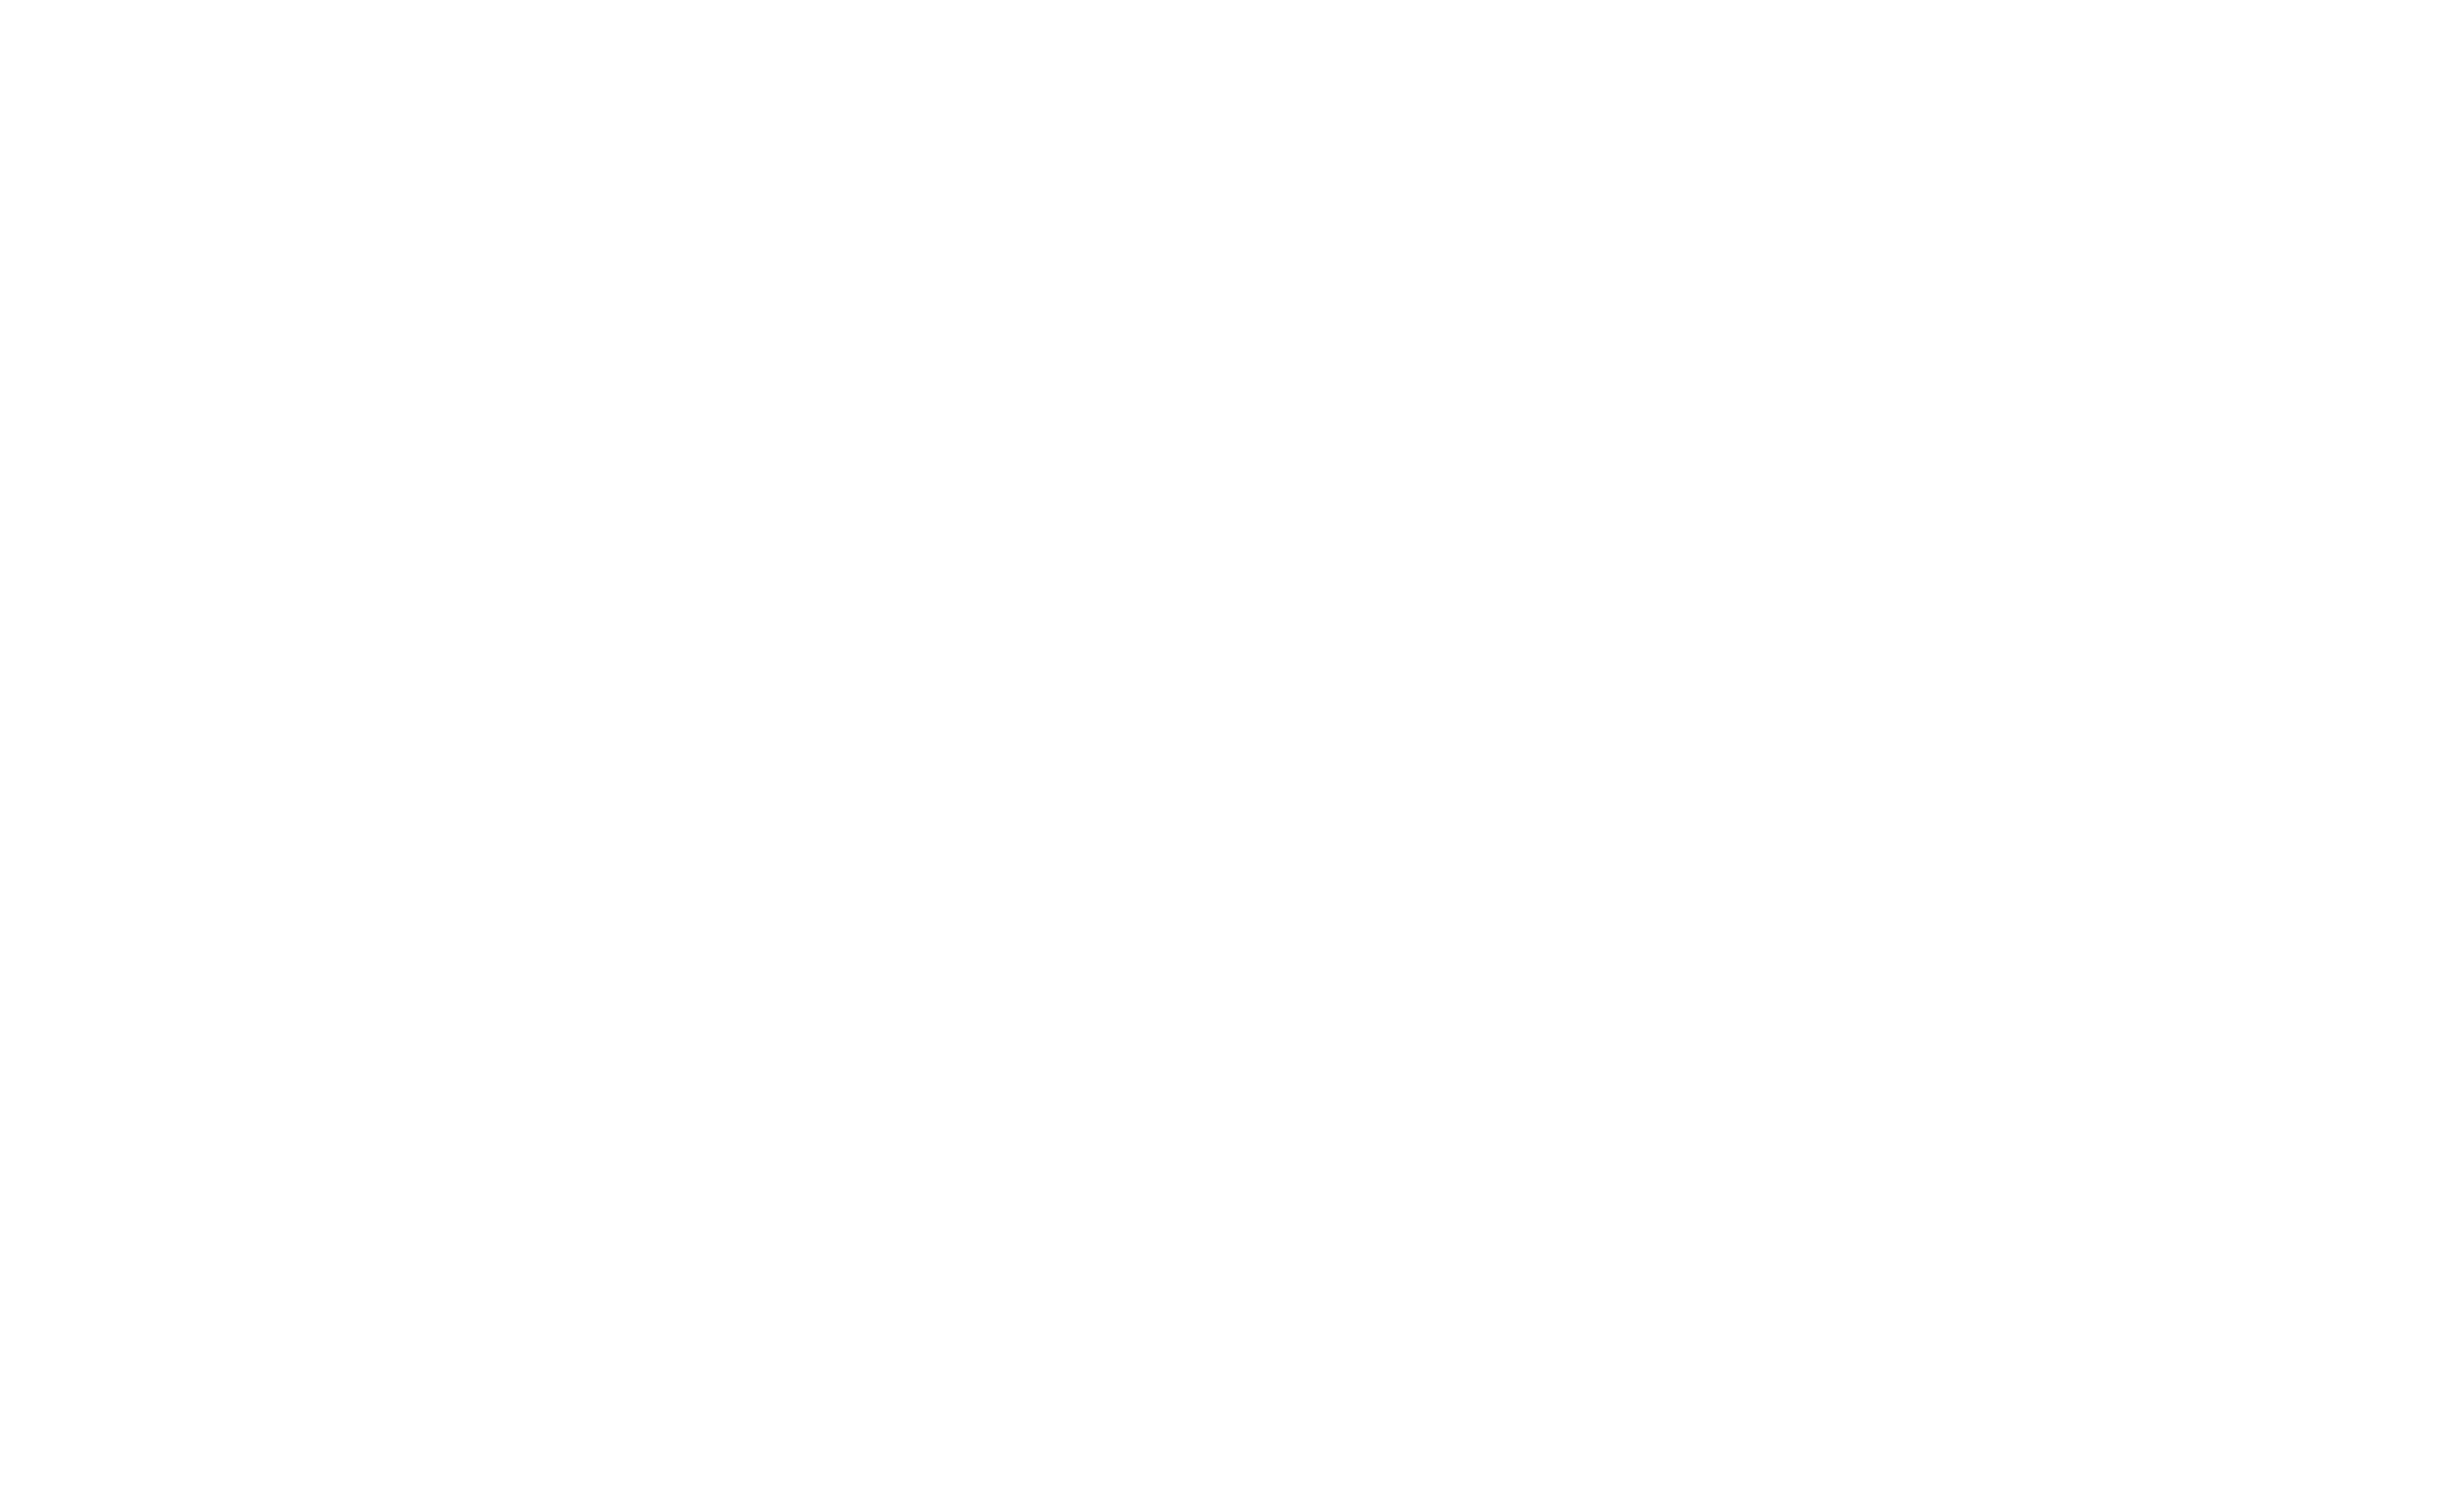 Easy Lend Mortgage